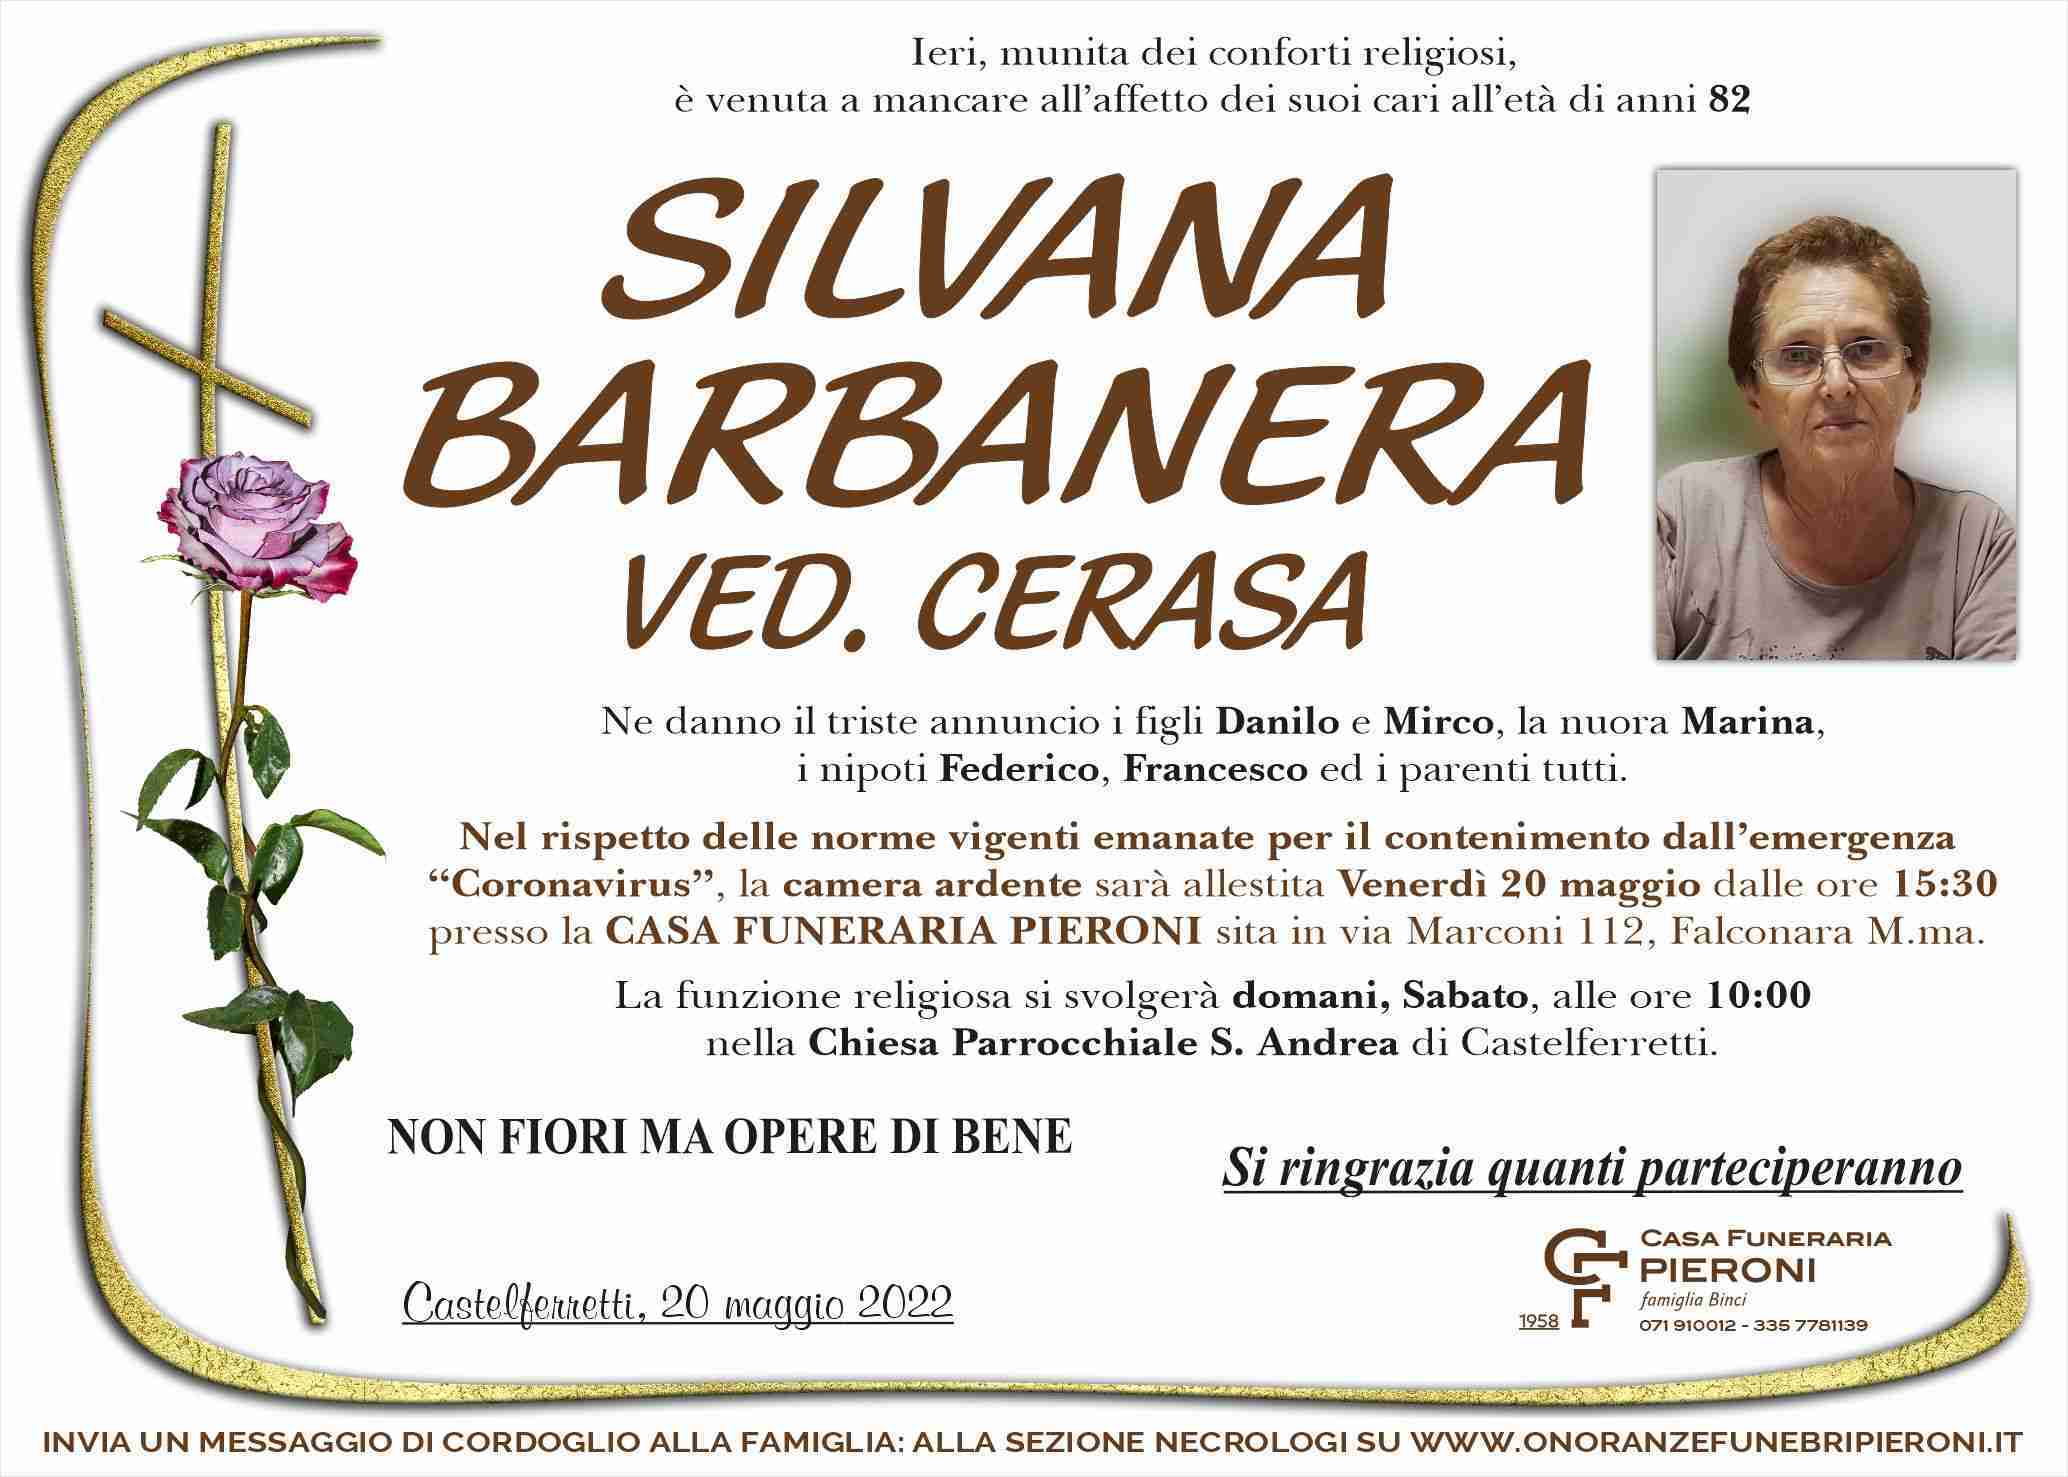 Silvana Barbanera